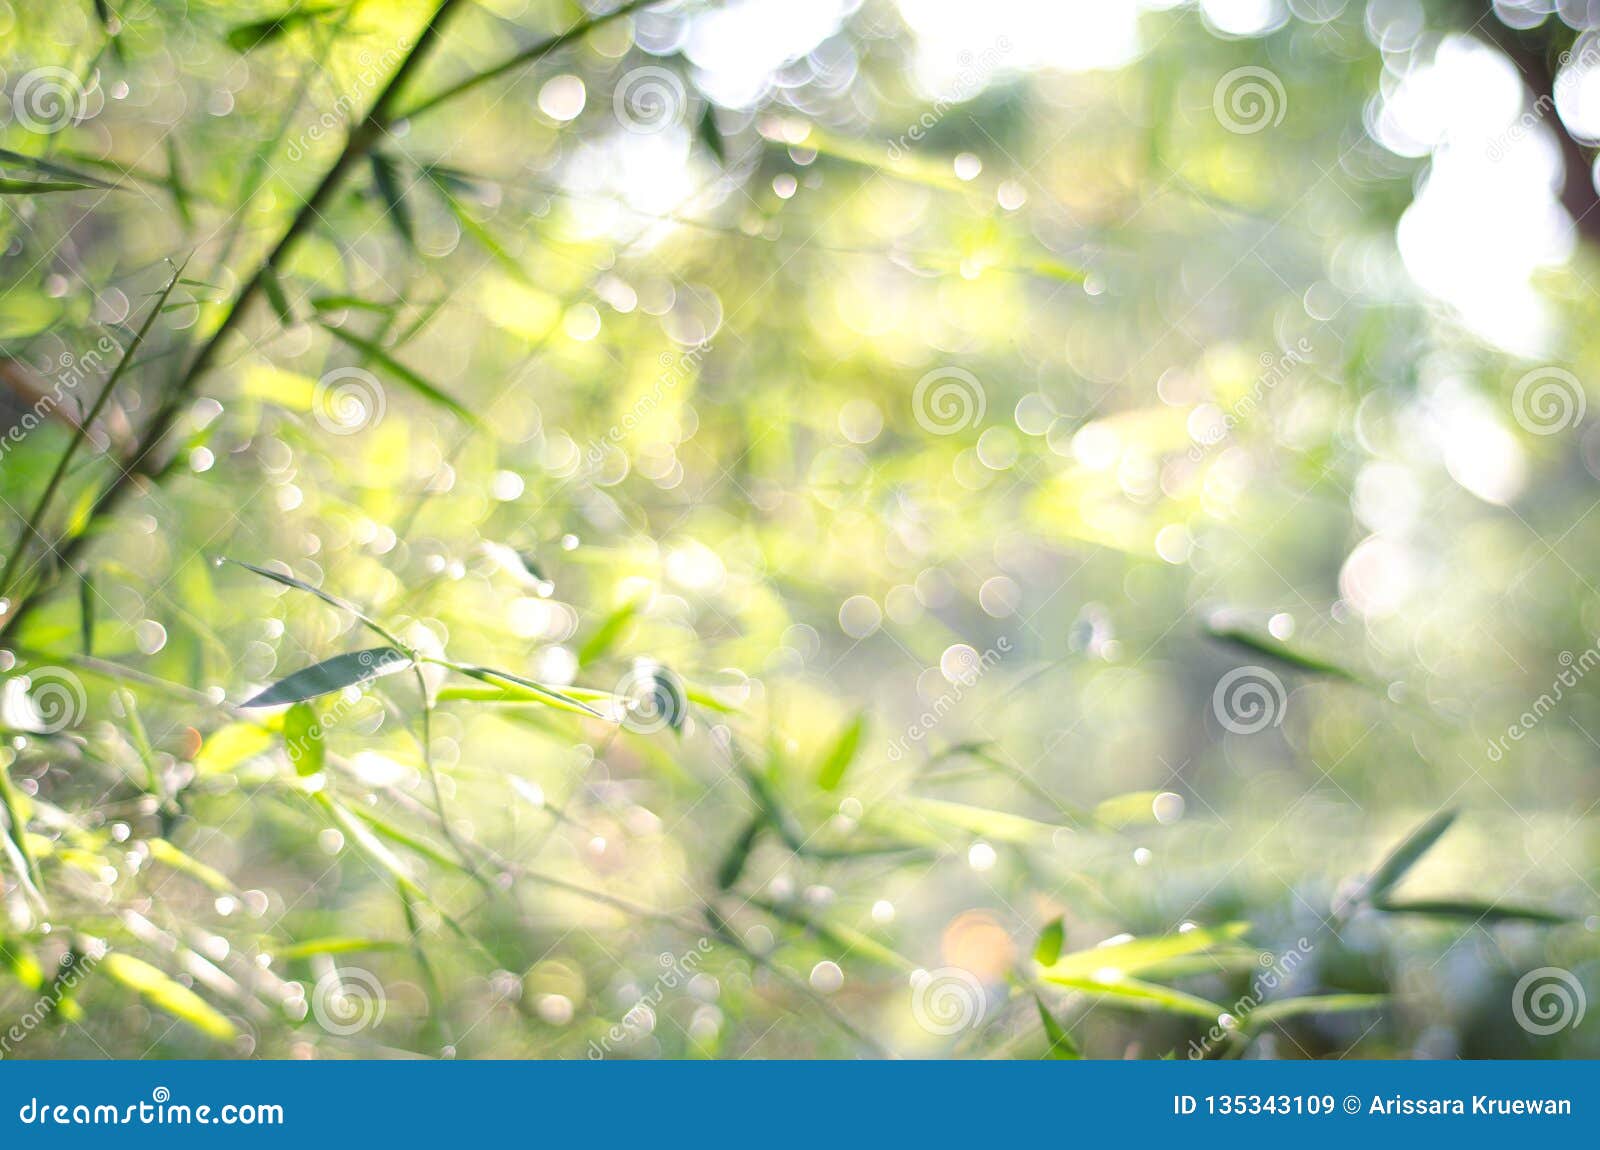 Nature Bokeh Abstract Light Background Stock Image - Image of freshness,  background: 135343109